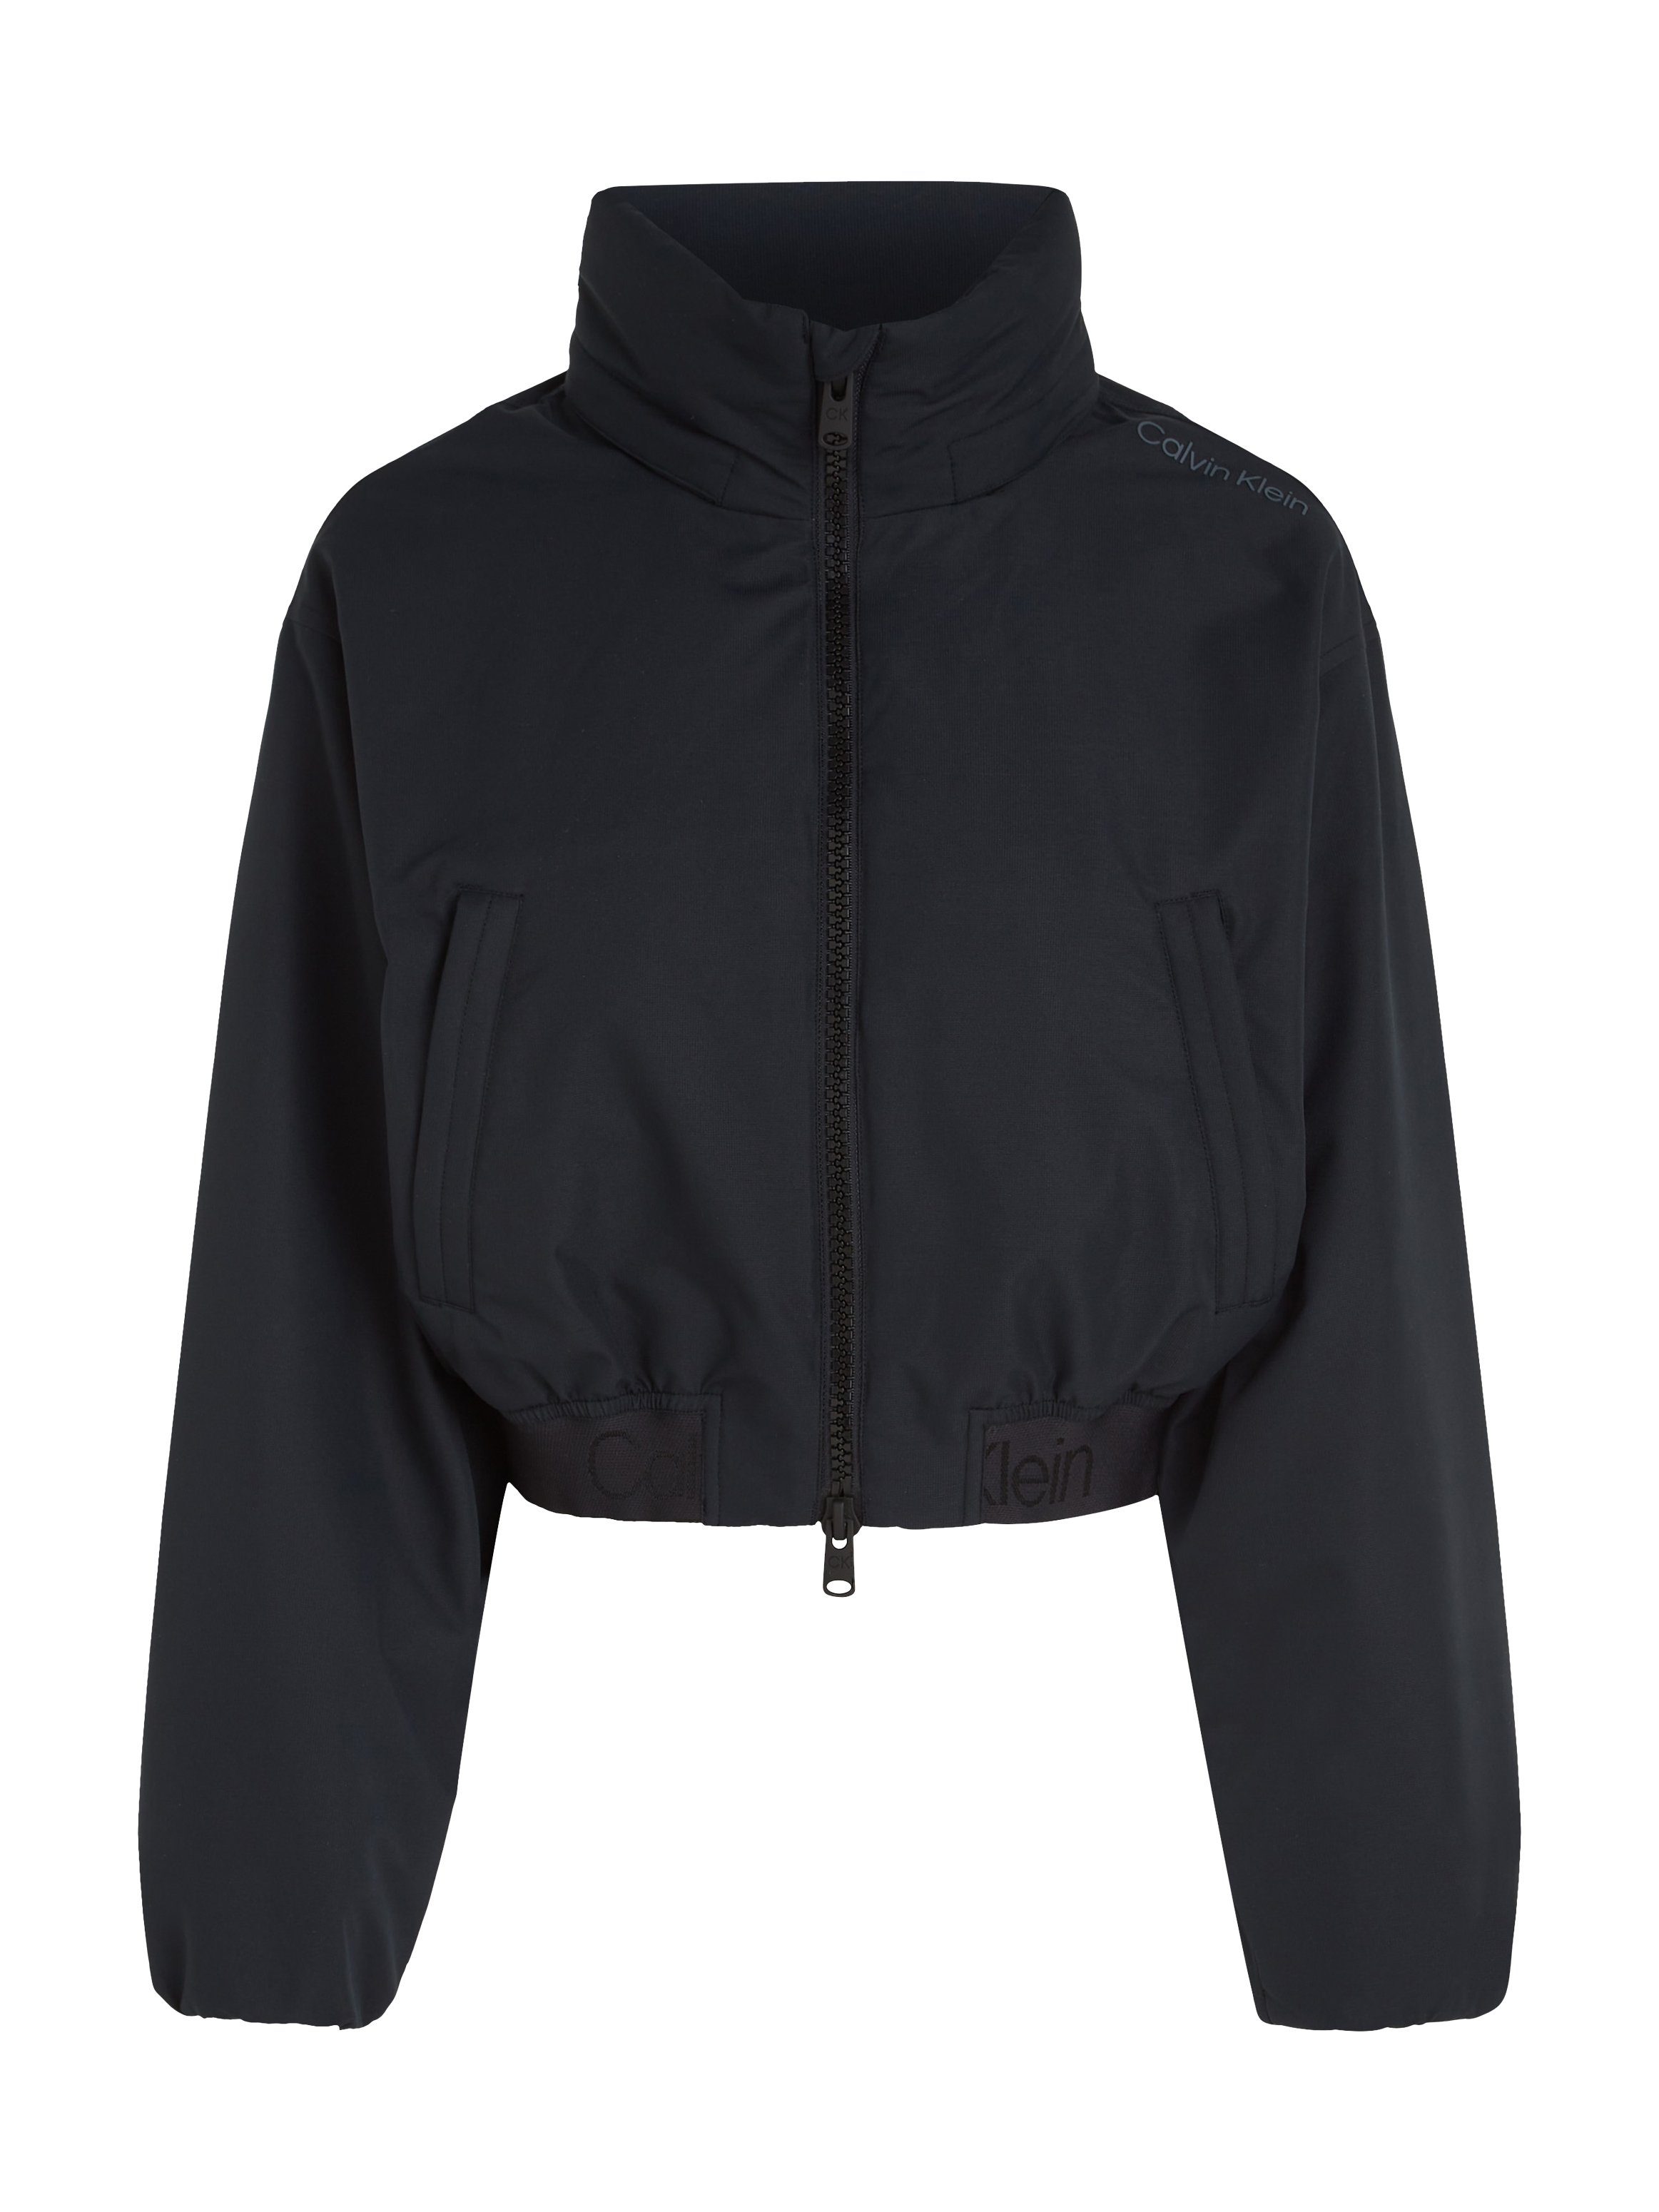 Calvin Klein Sport Outdoorjacke PW - Padded Jacket schwarz